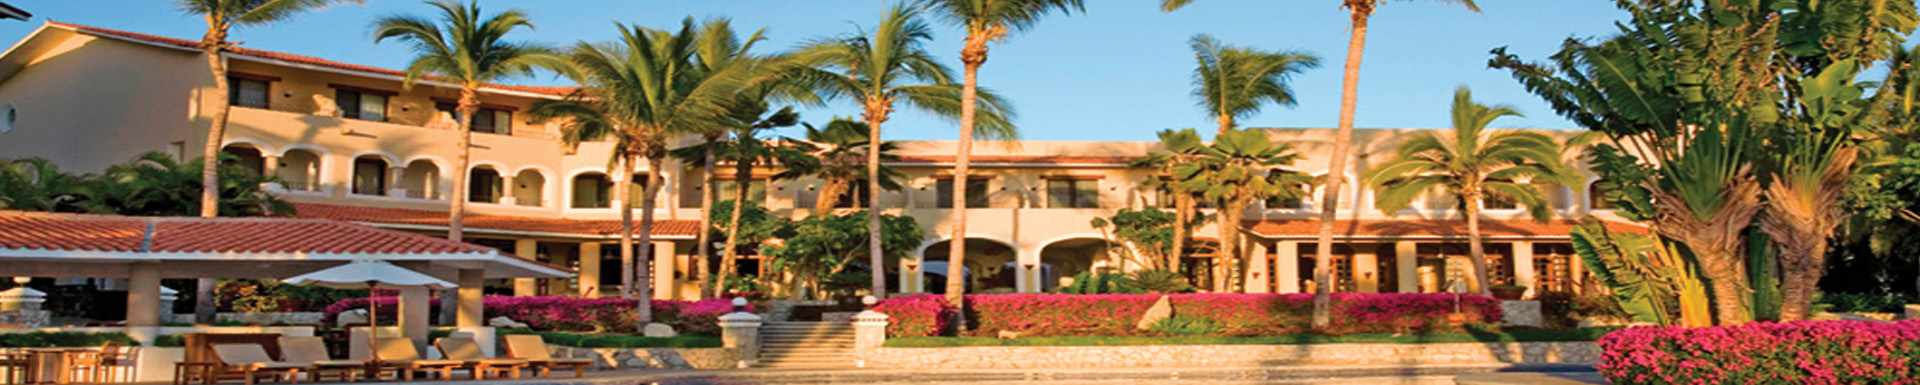 Las Residencias Golf & Beach Club